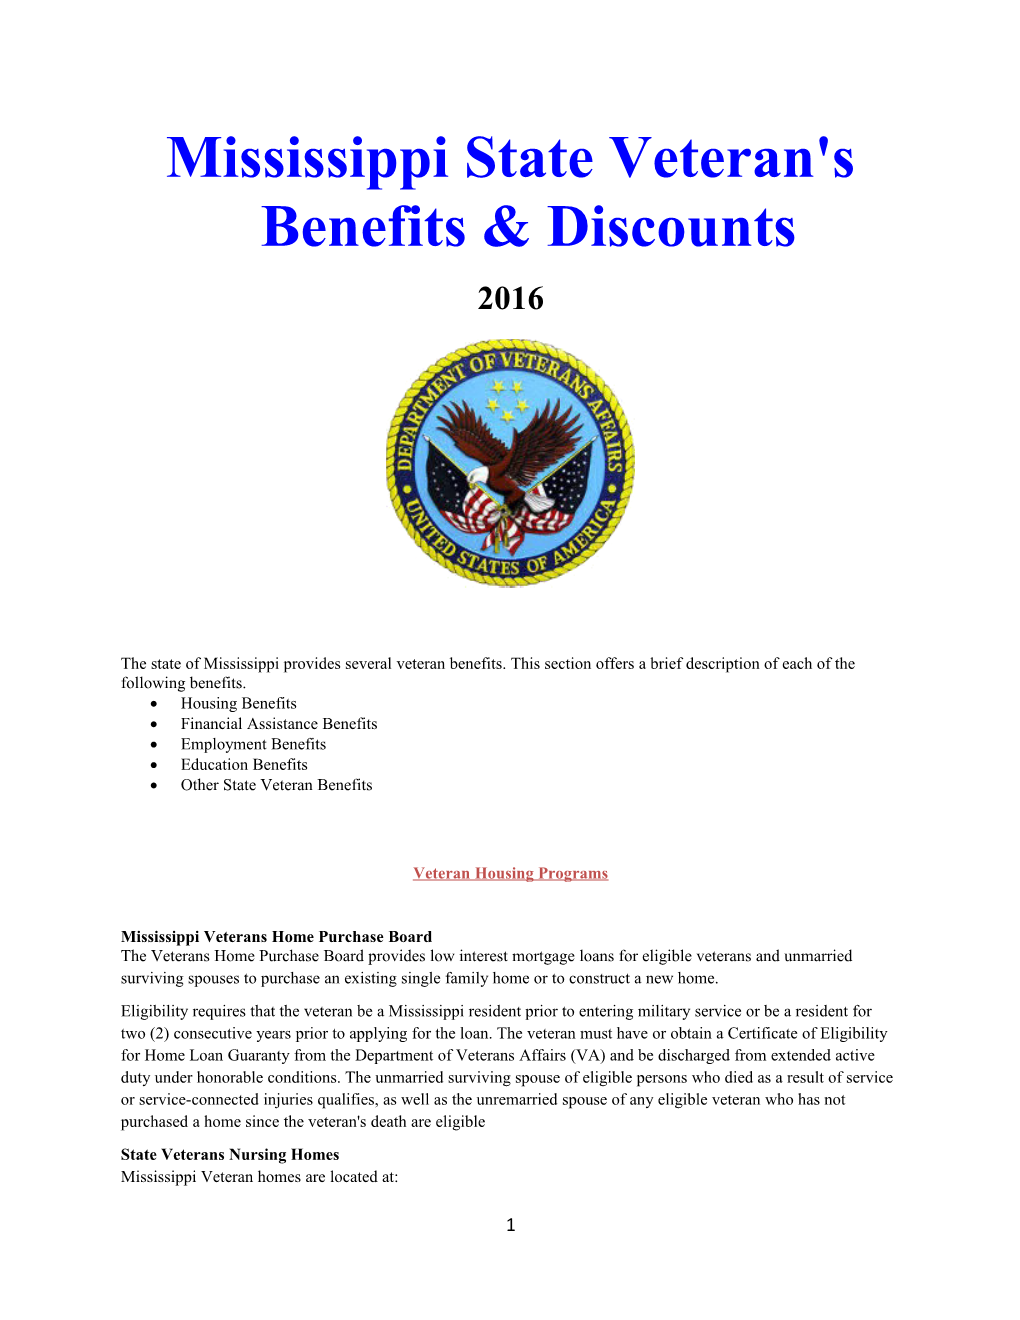 Mississippi State Veteran's Benefits & Discounts